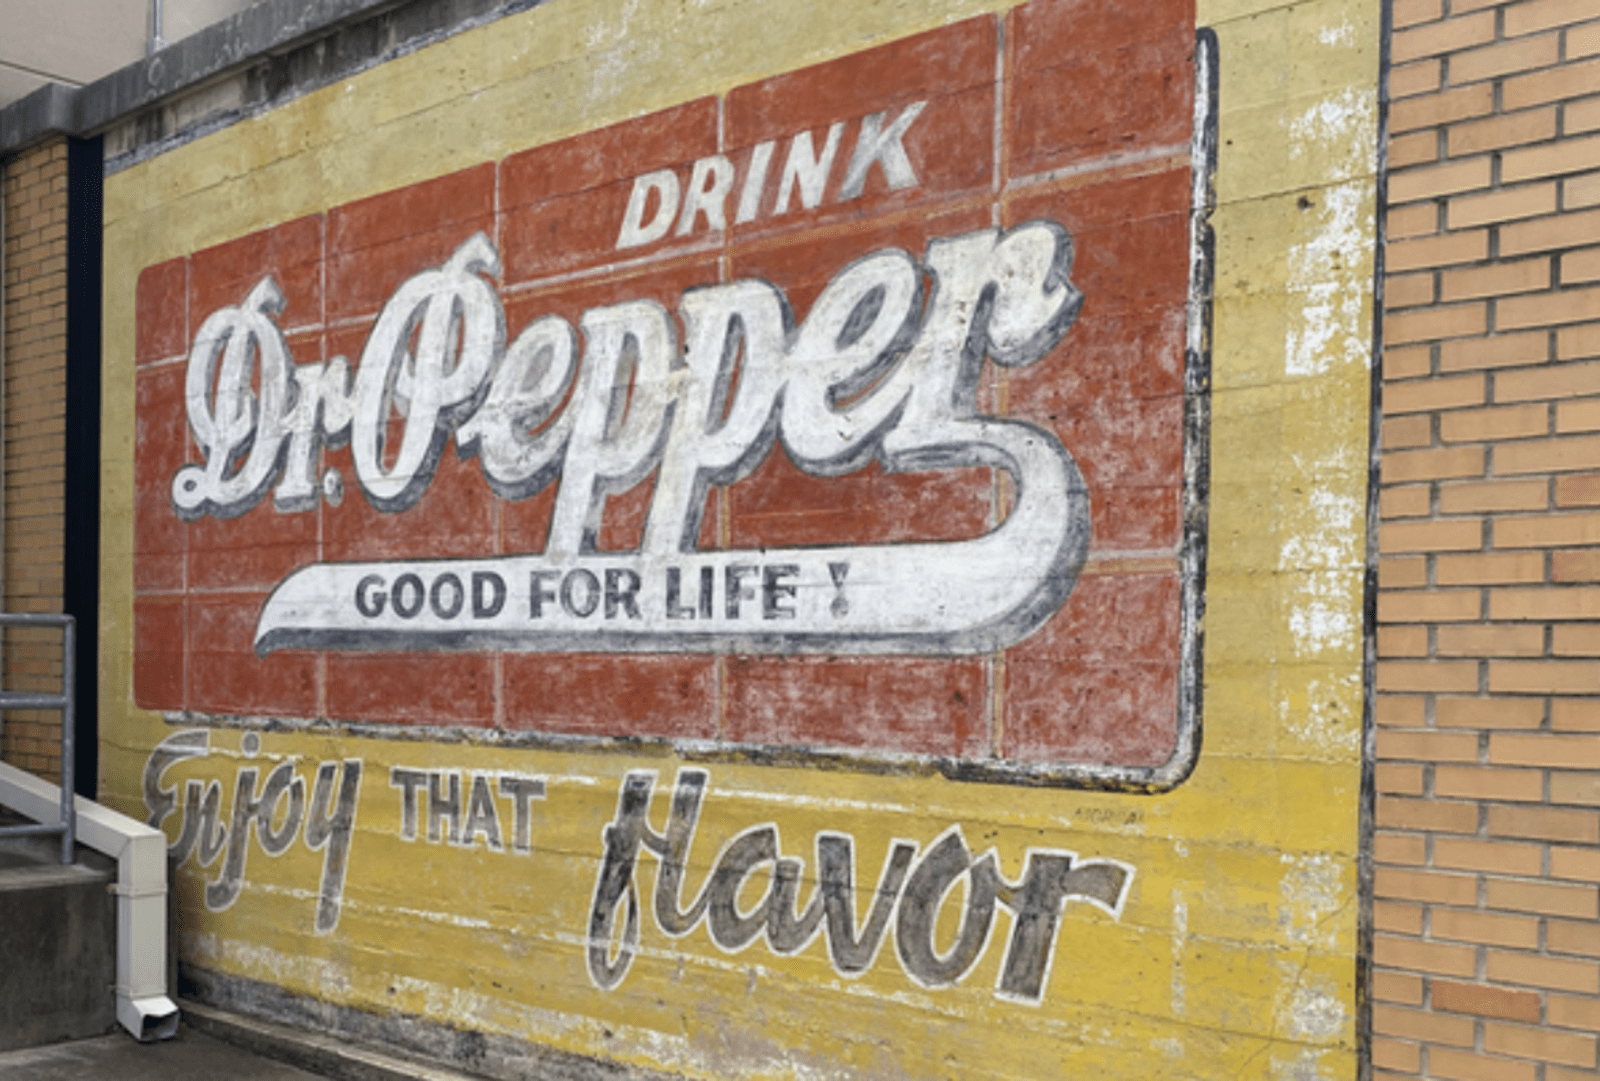 Retro style Dr Pepper ad on an exterior wall, Waco, Texas. 